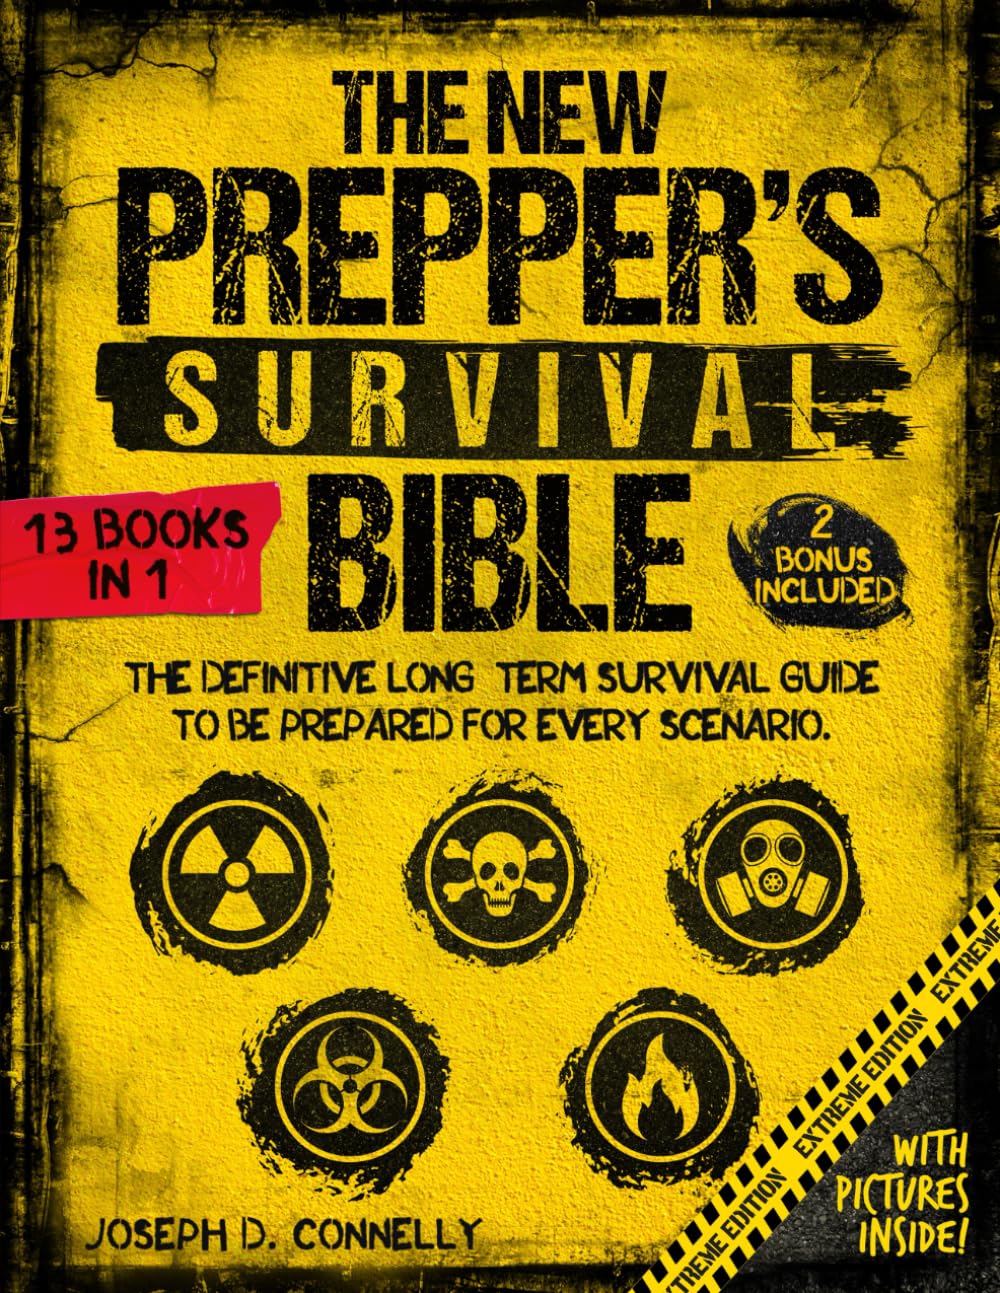 Roundup of Essential Survival Guides for Preparedness